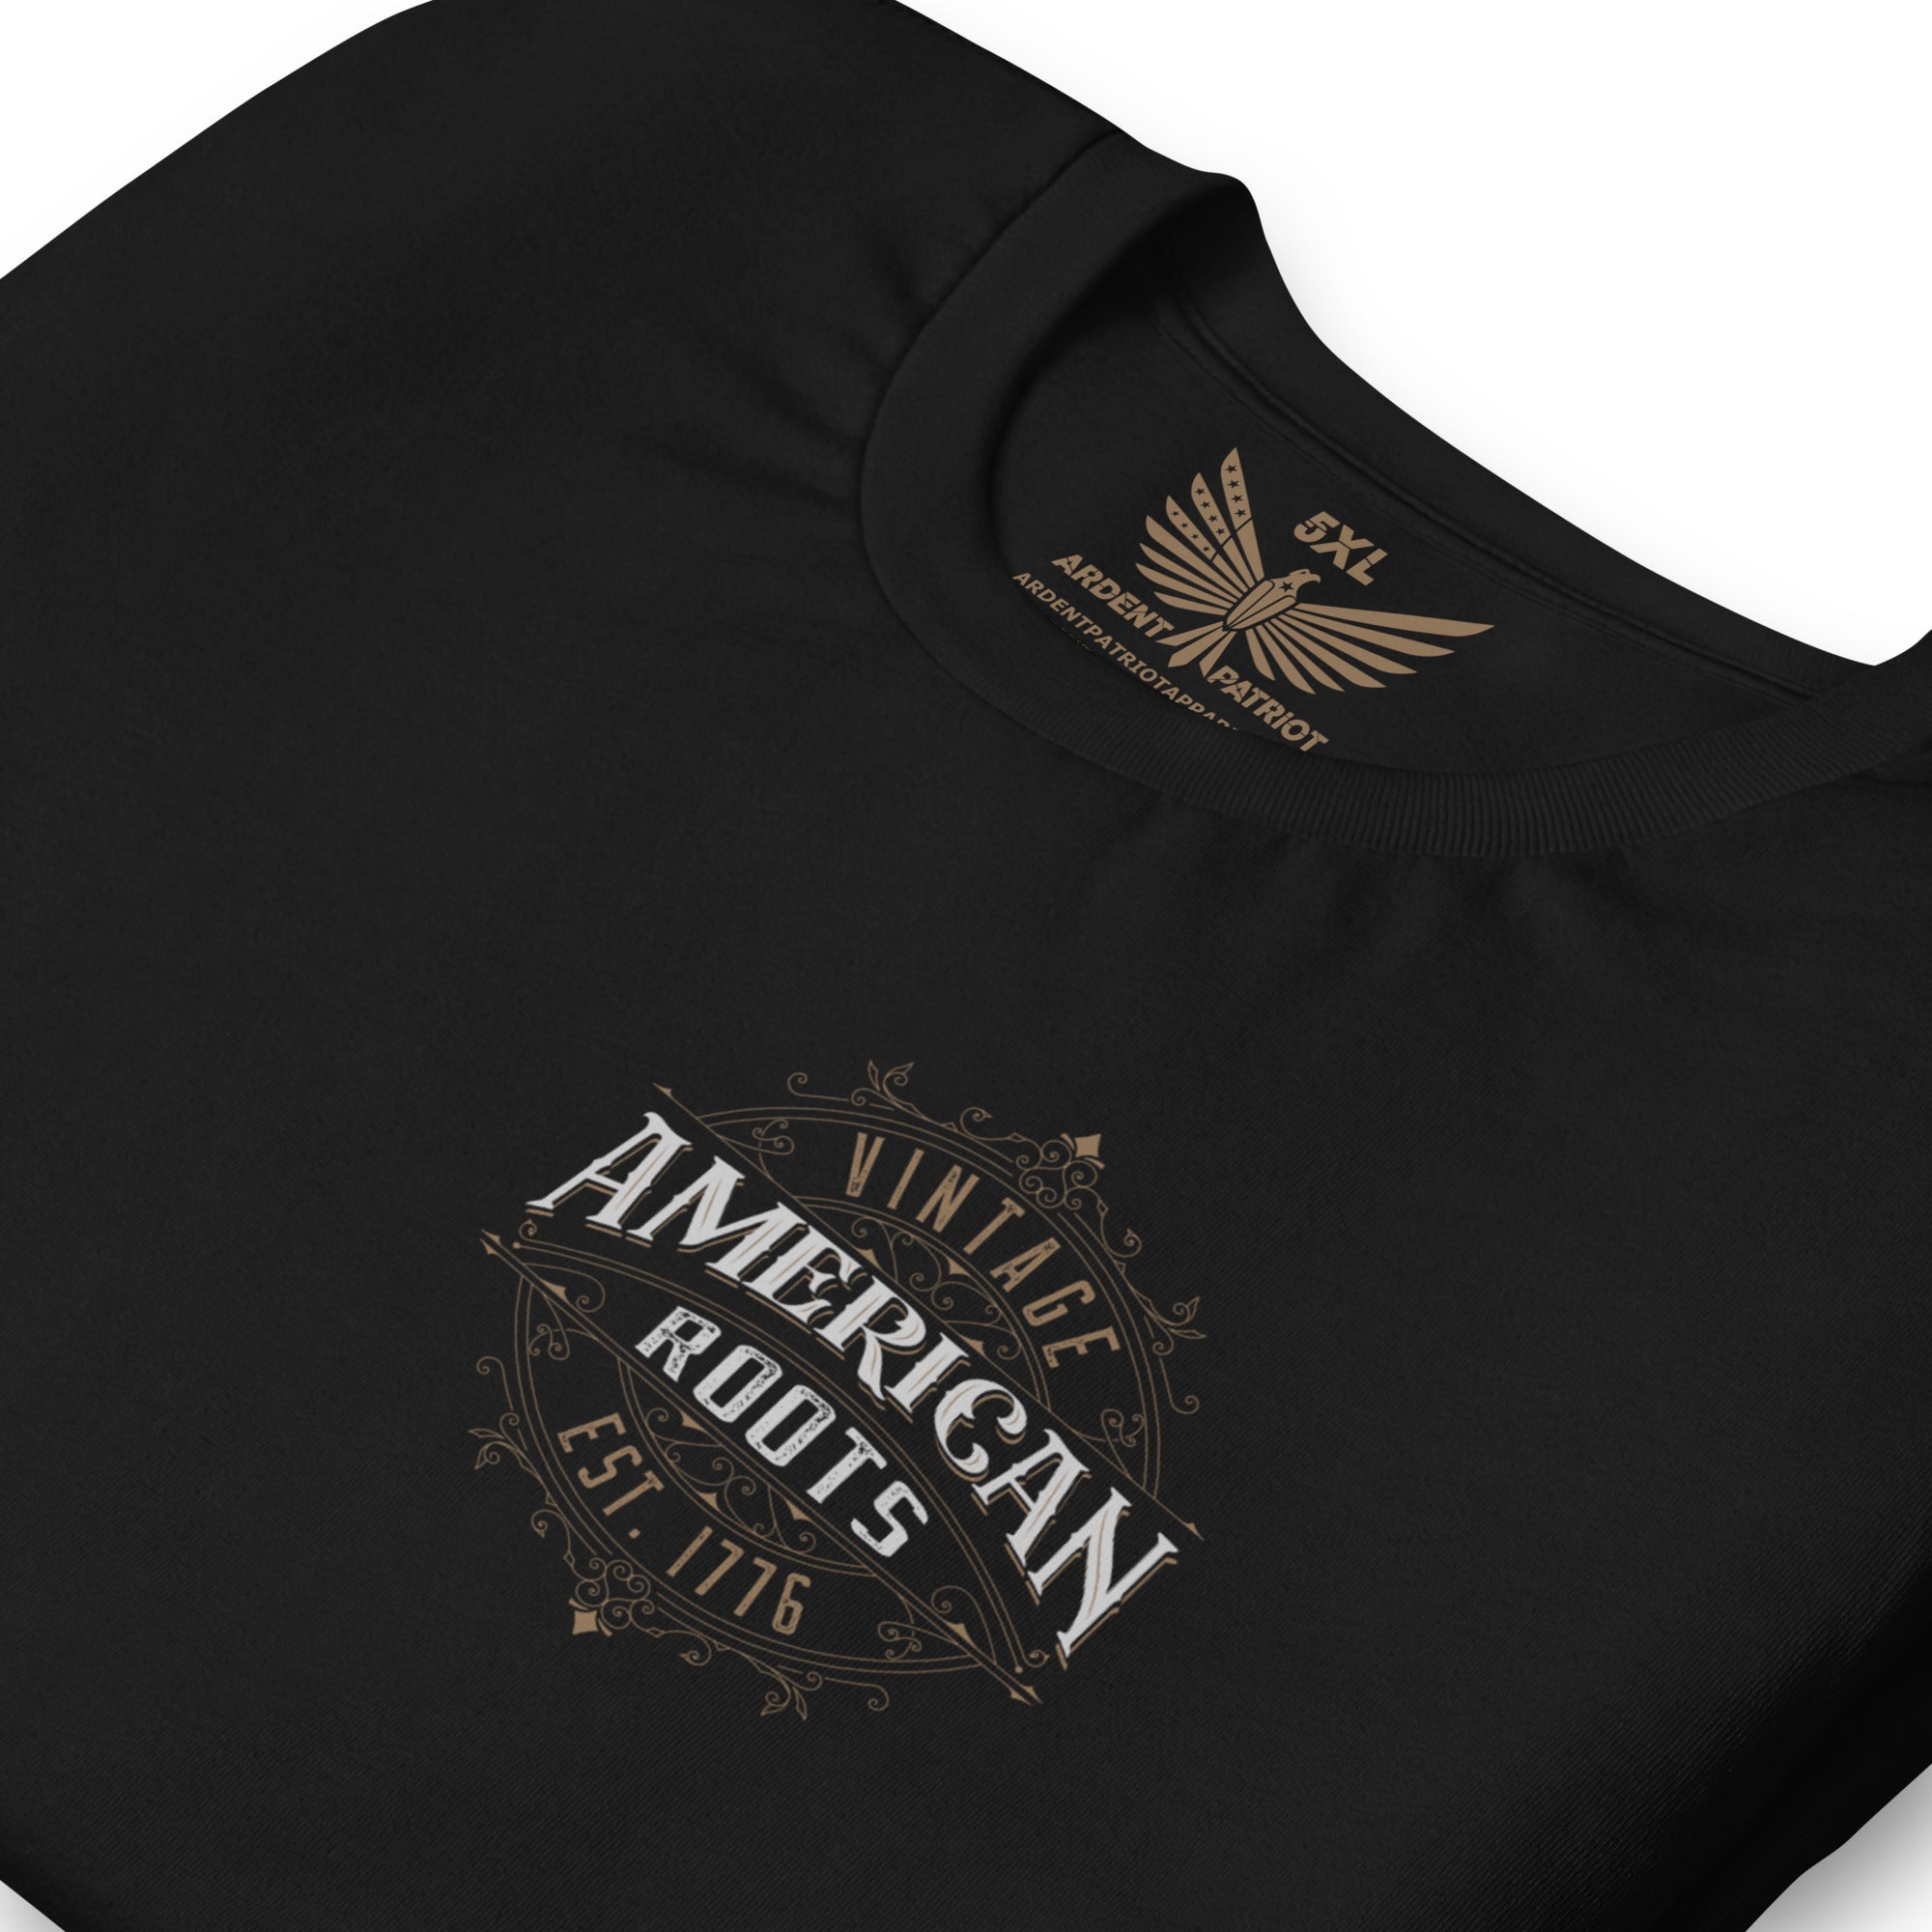 Driving America-Men's Shirt-Ardent Patriot Apparel Co.